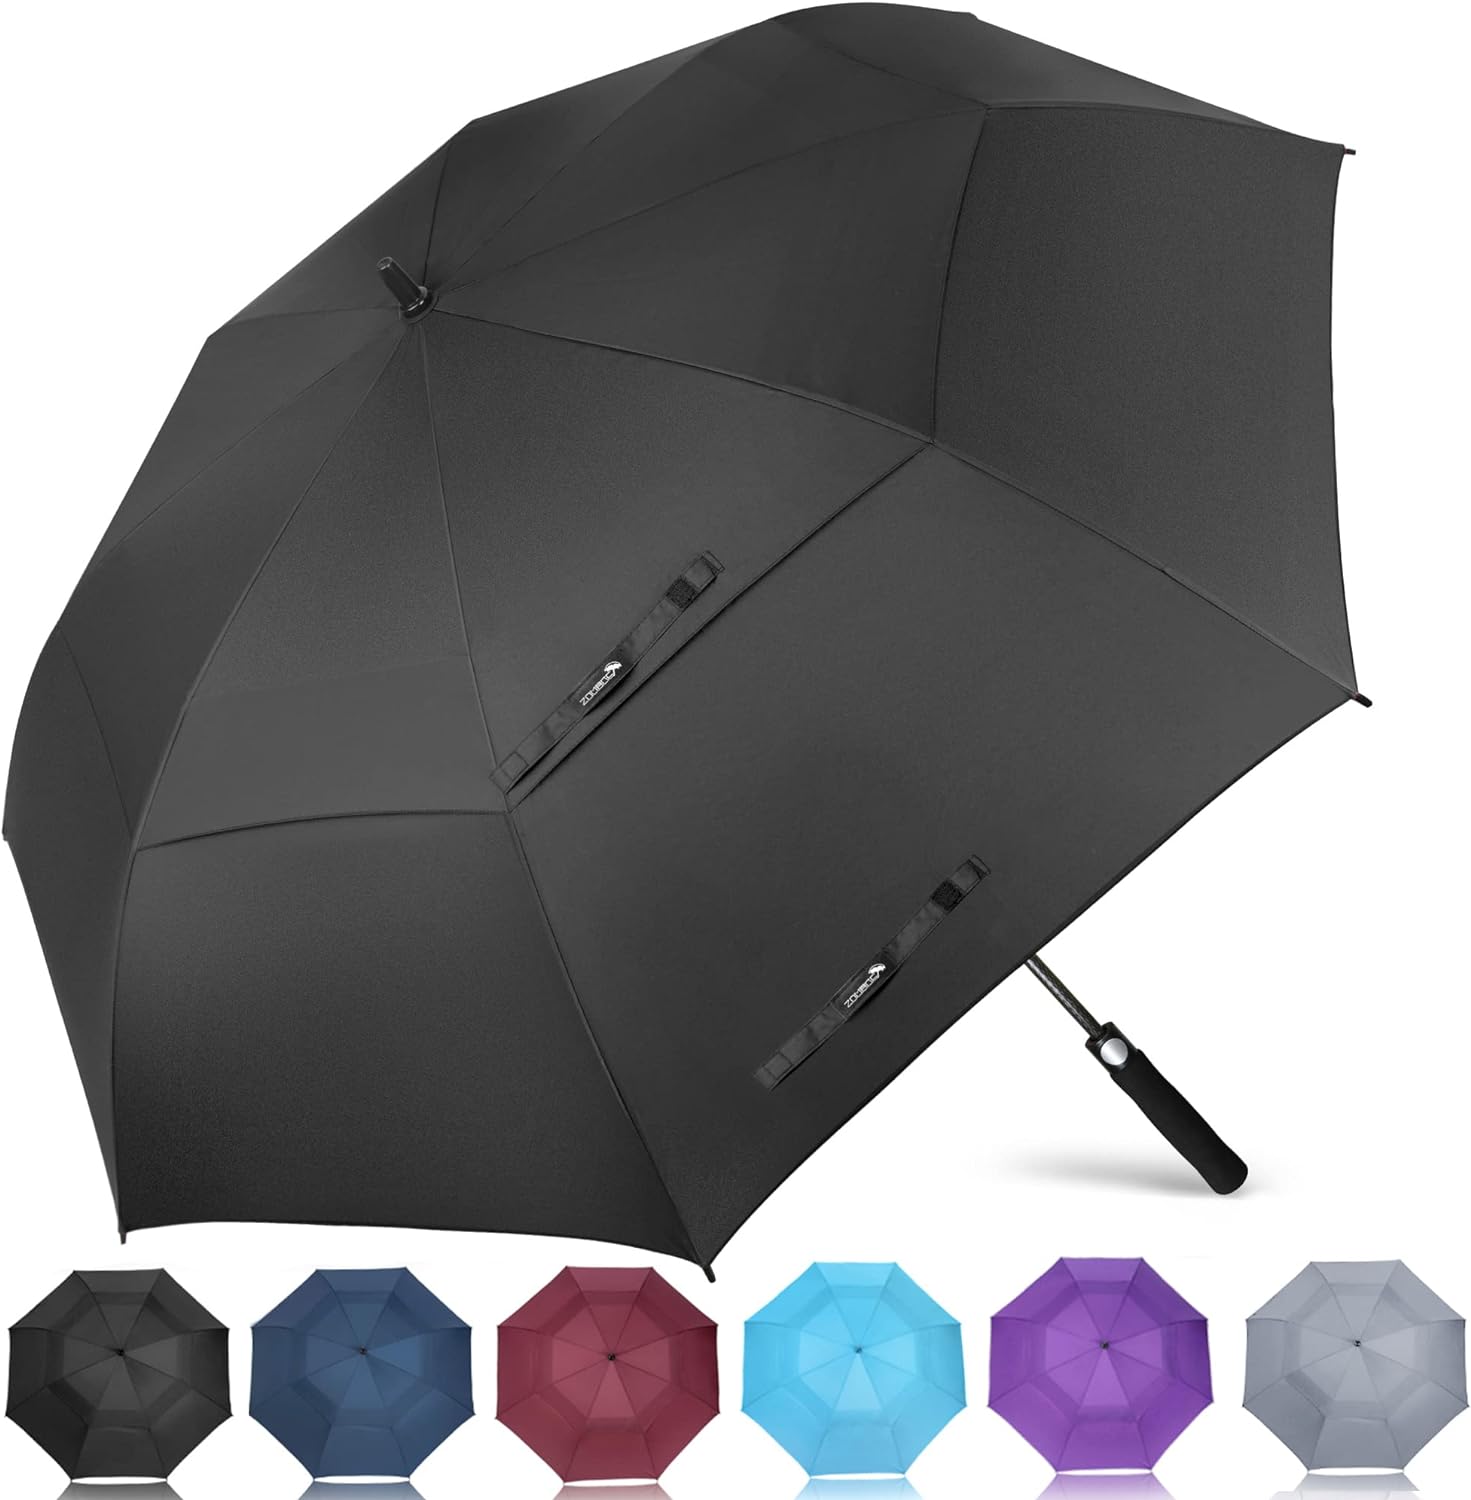 Up to 15% Off! ZOMAKE Golf Umbrella 62 Inch - Vented Stick Umbrellas